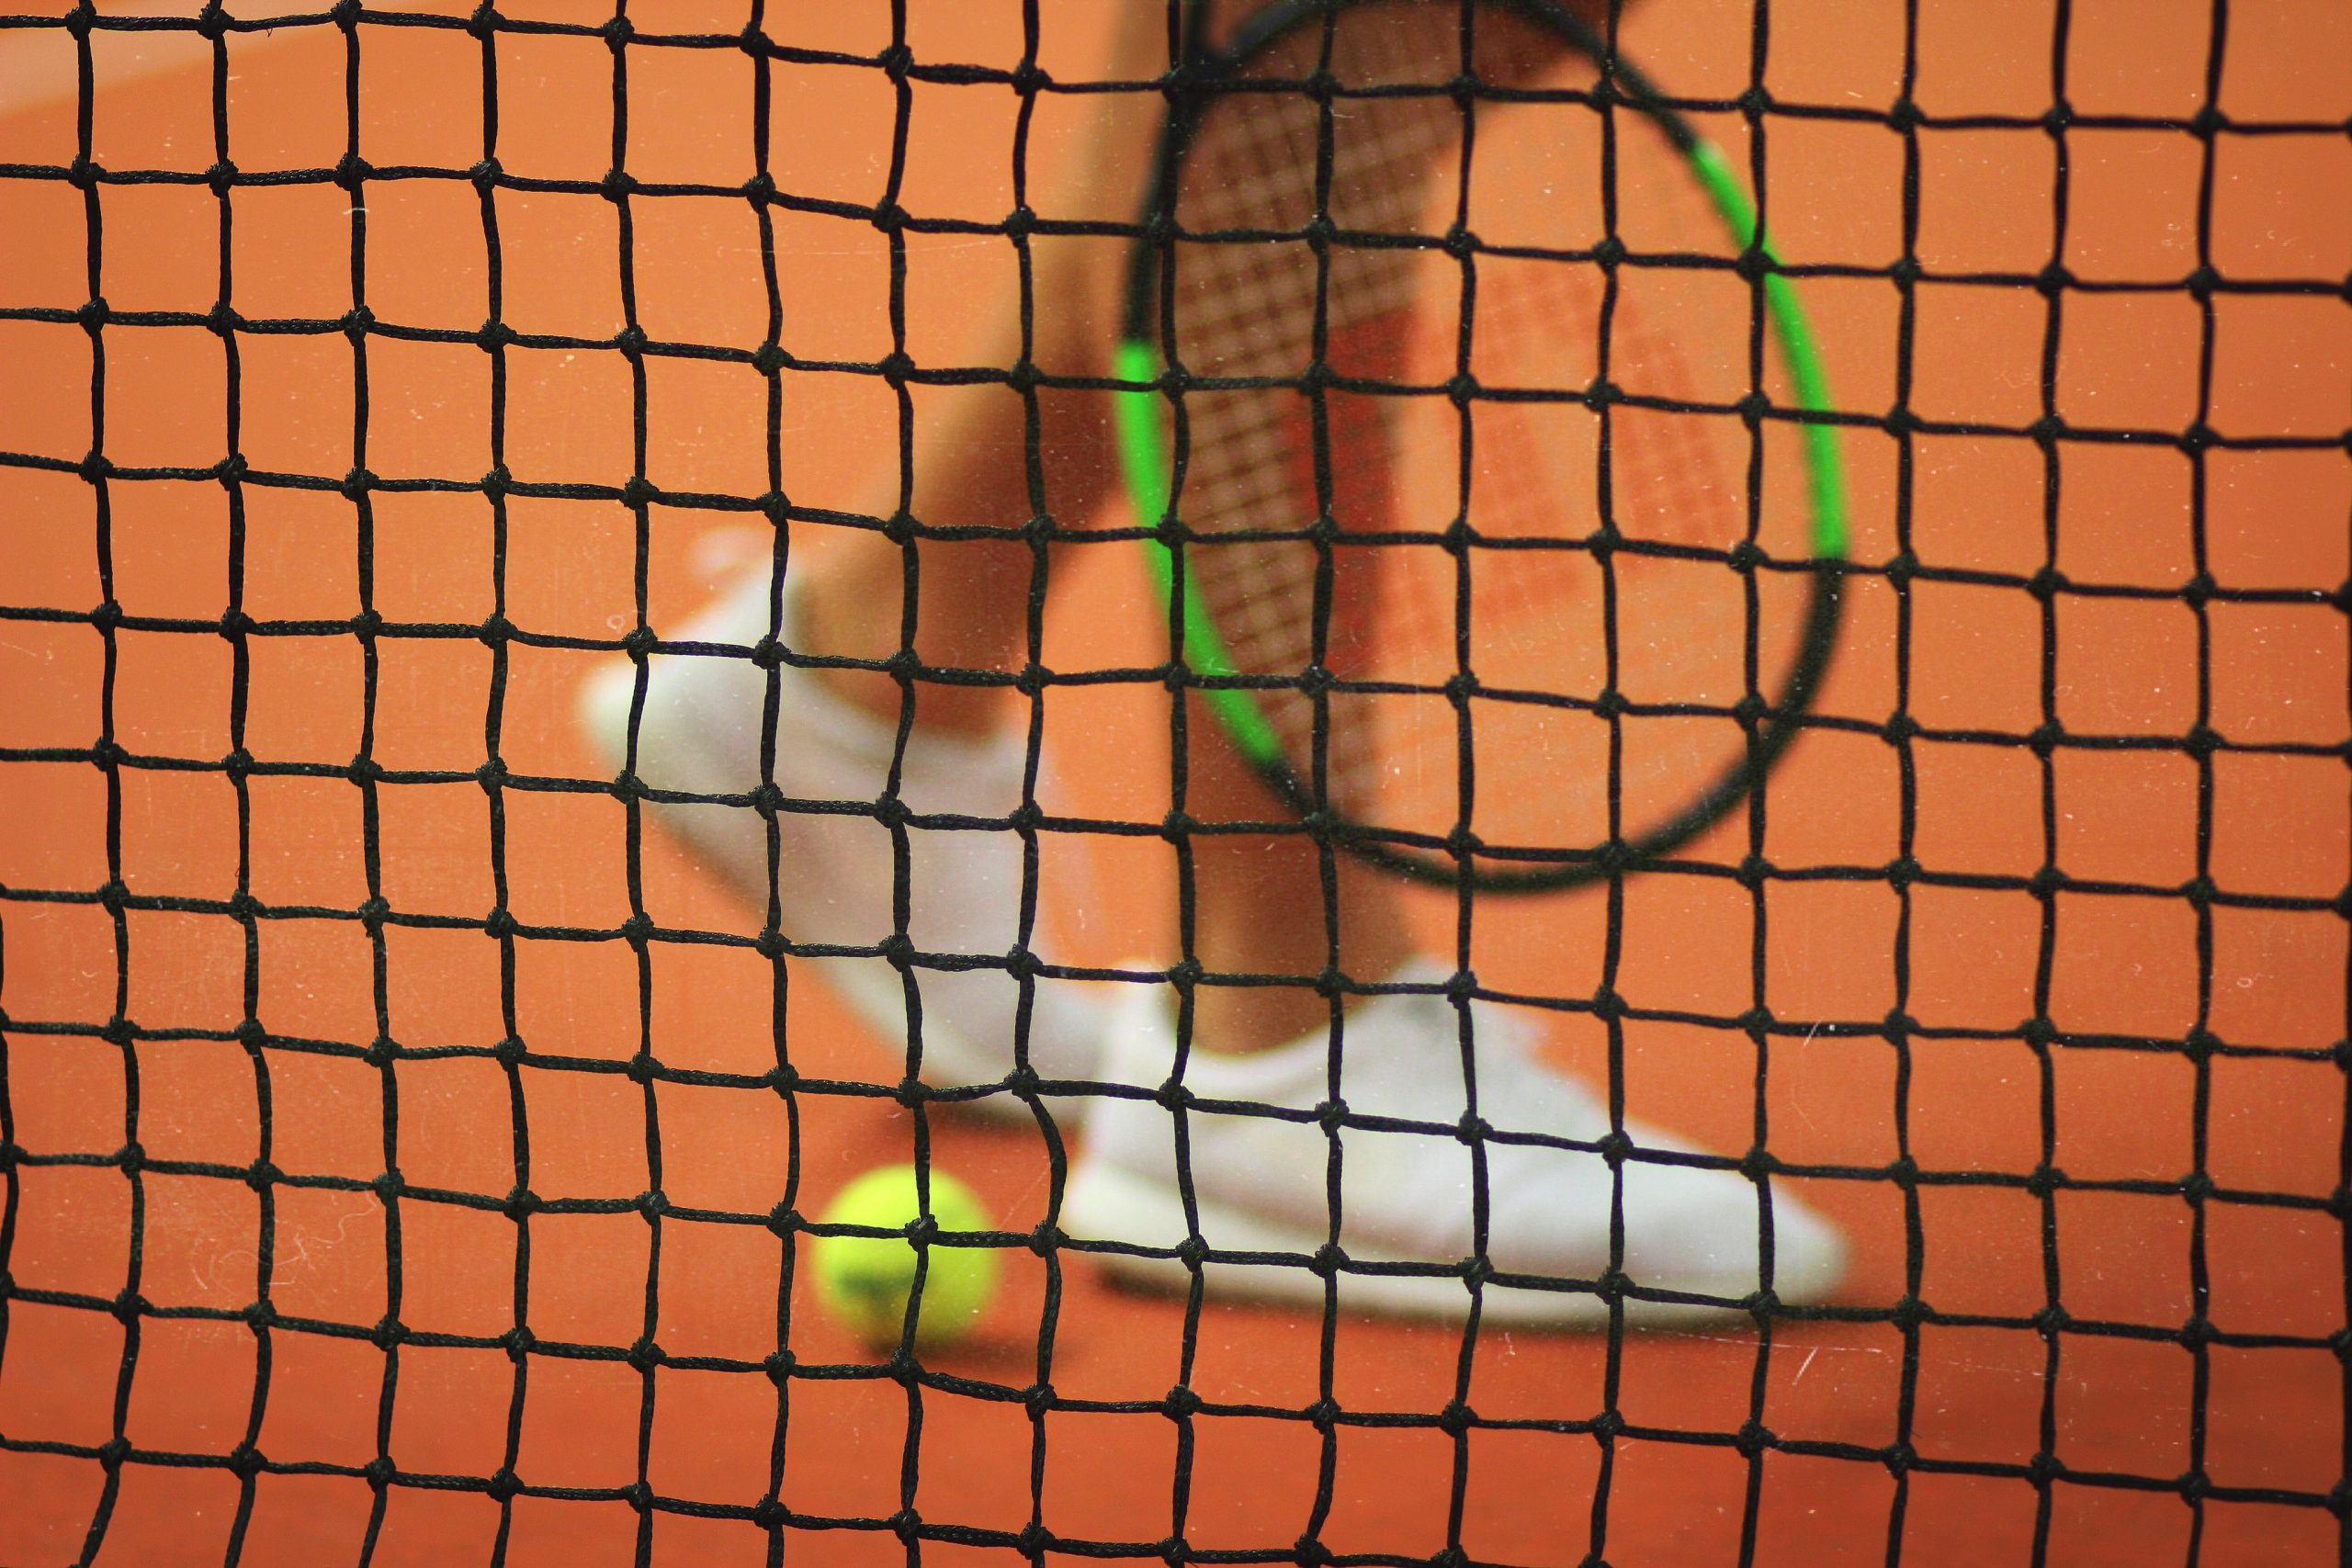 Tennis player, tennis racket, tennis shoes and tennis ball